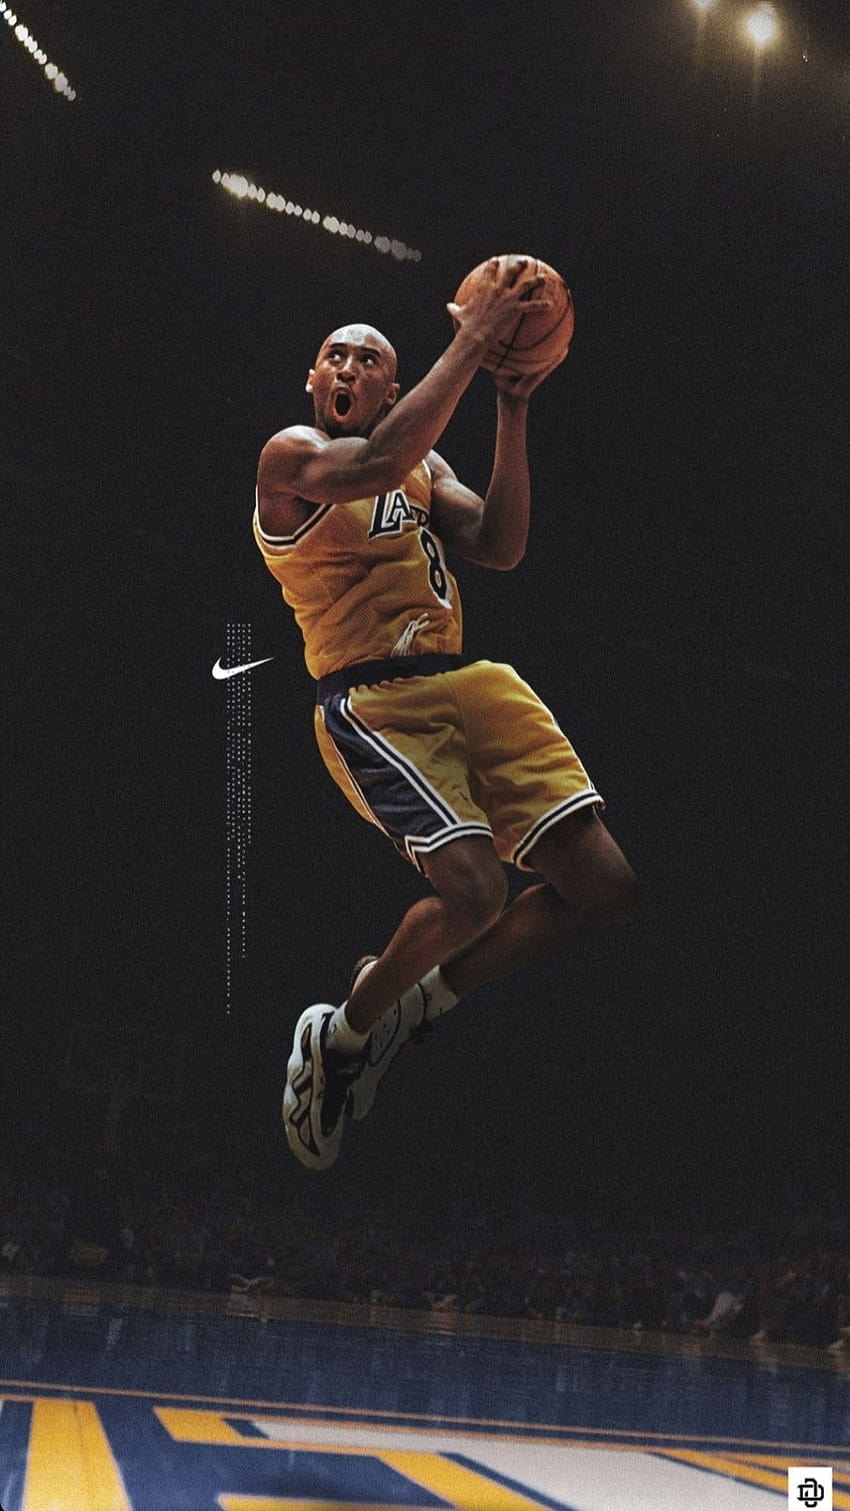 Devin Booker felt Kobe Bryants presence in Staples Center as Phoenix Suns  superstar reflects on Game 6 blitz  NBA News  Sky Sports